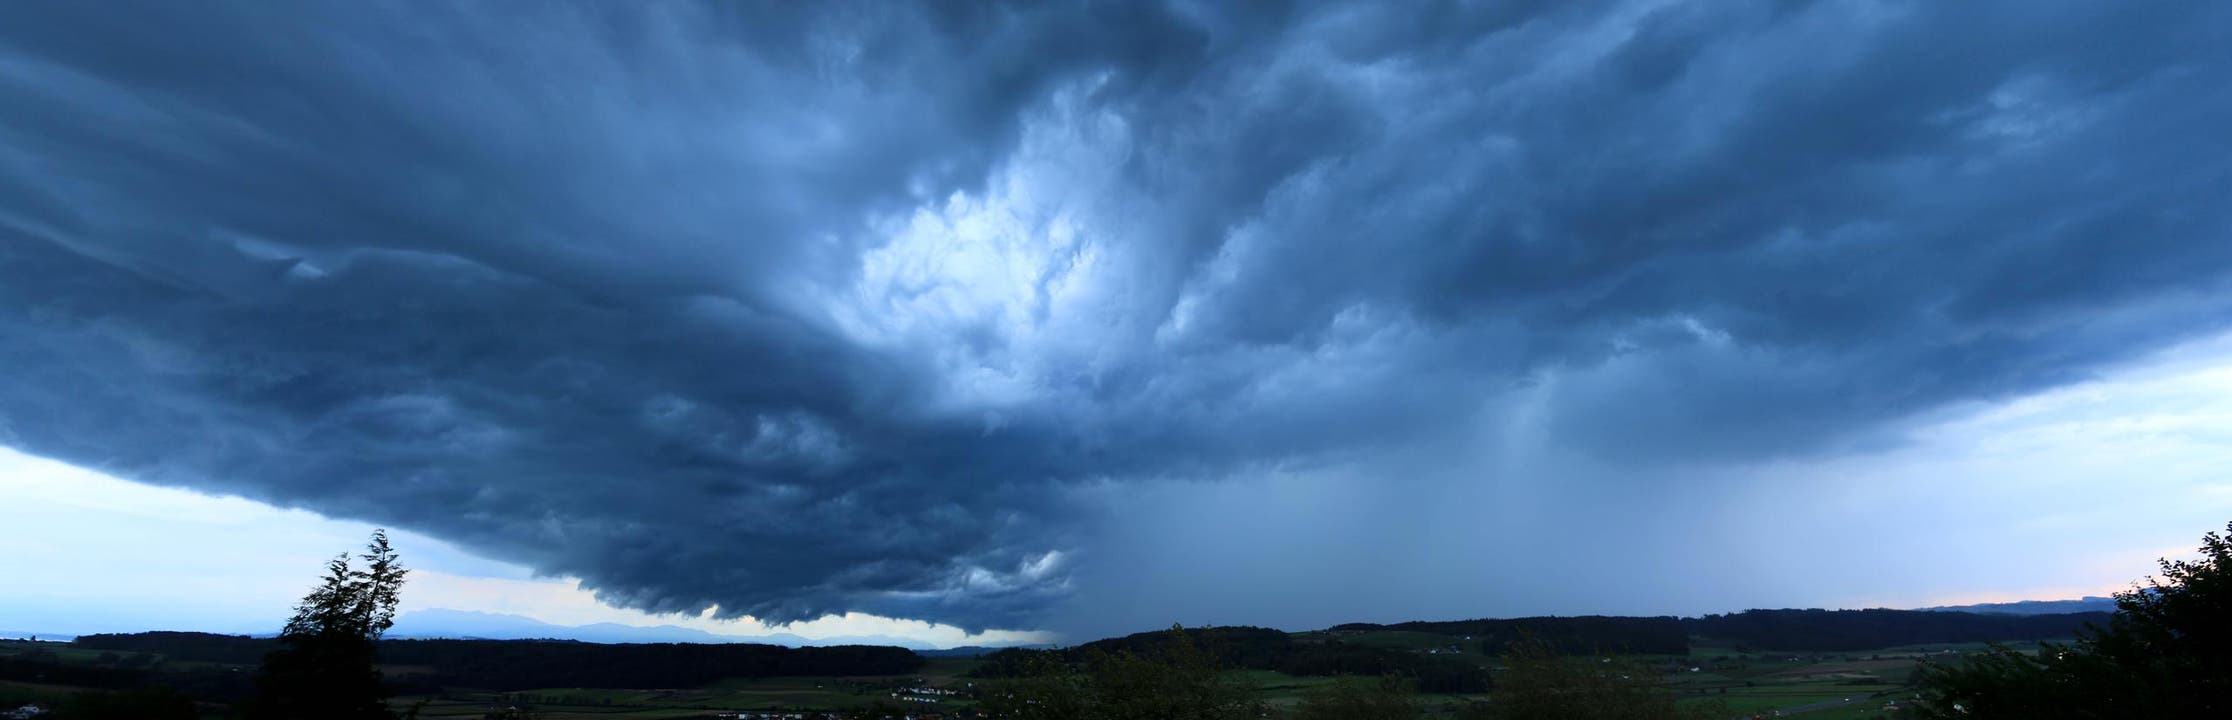 Wetterwolke über Uffikon. (Bild: Leserbild Beat Waldisberg)